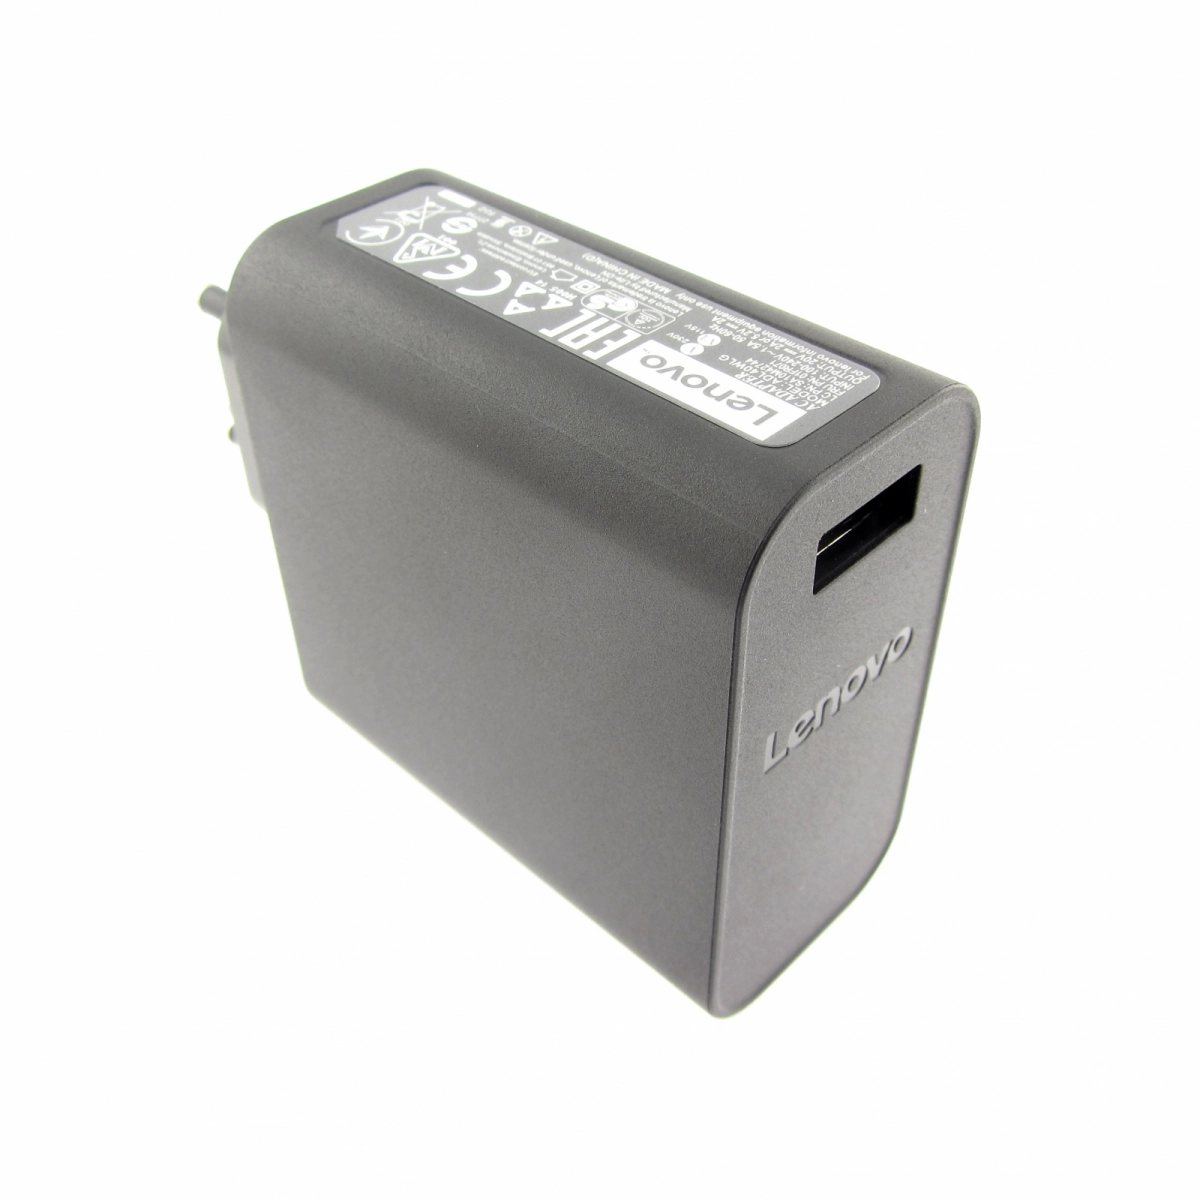 Original Netzteil für LENOVO ADL40WCH 36200618, 20V, 2A, Stecker USB, ohne USB-Kabel